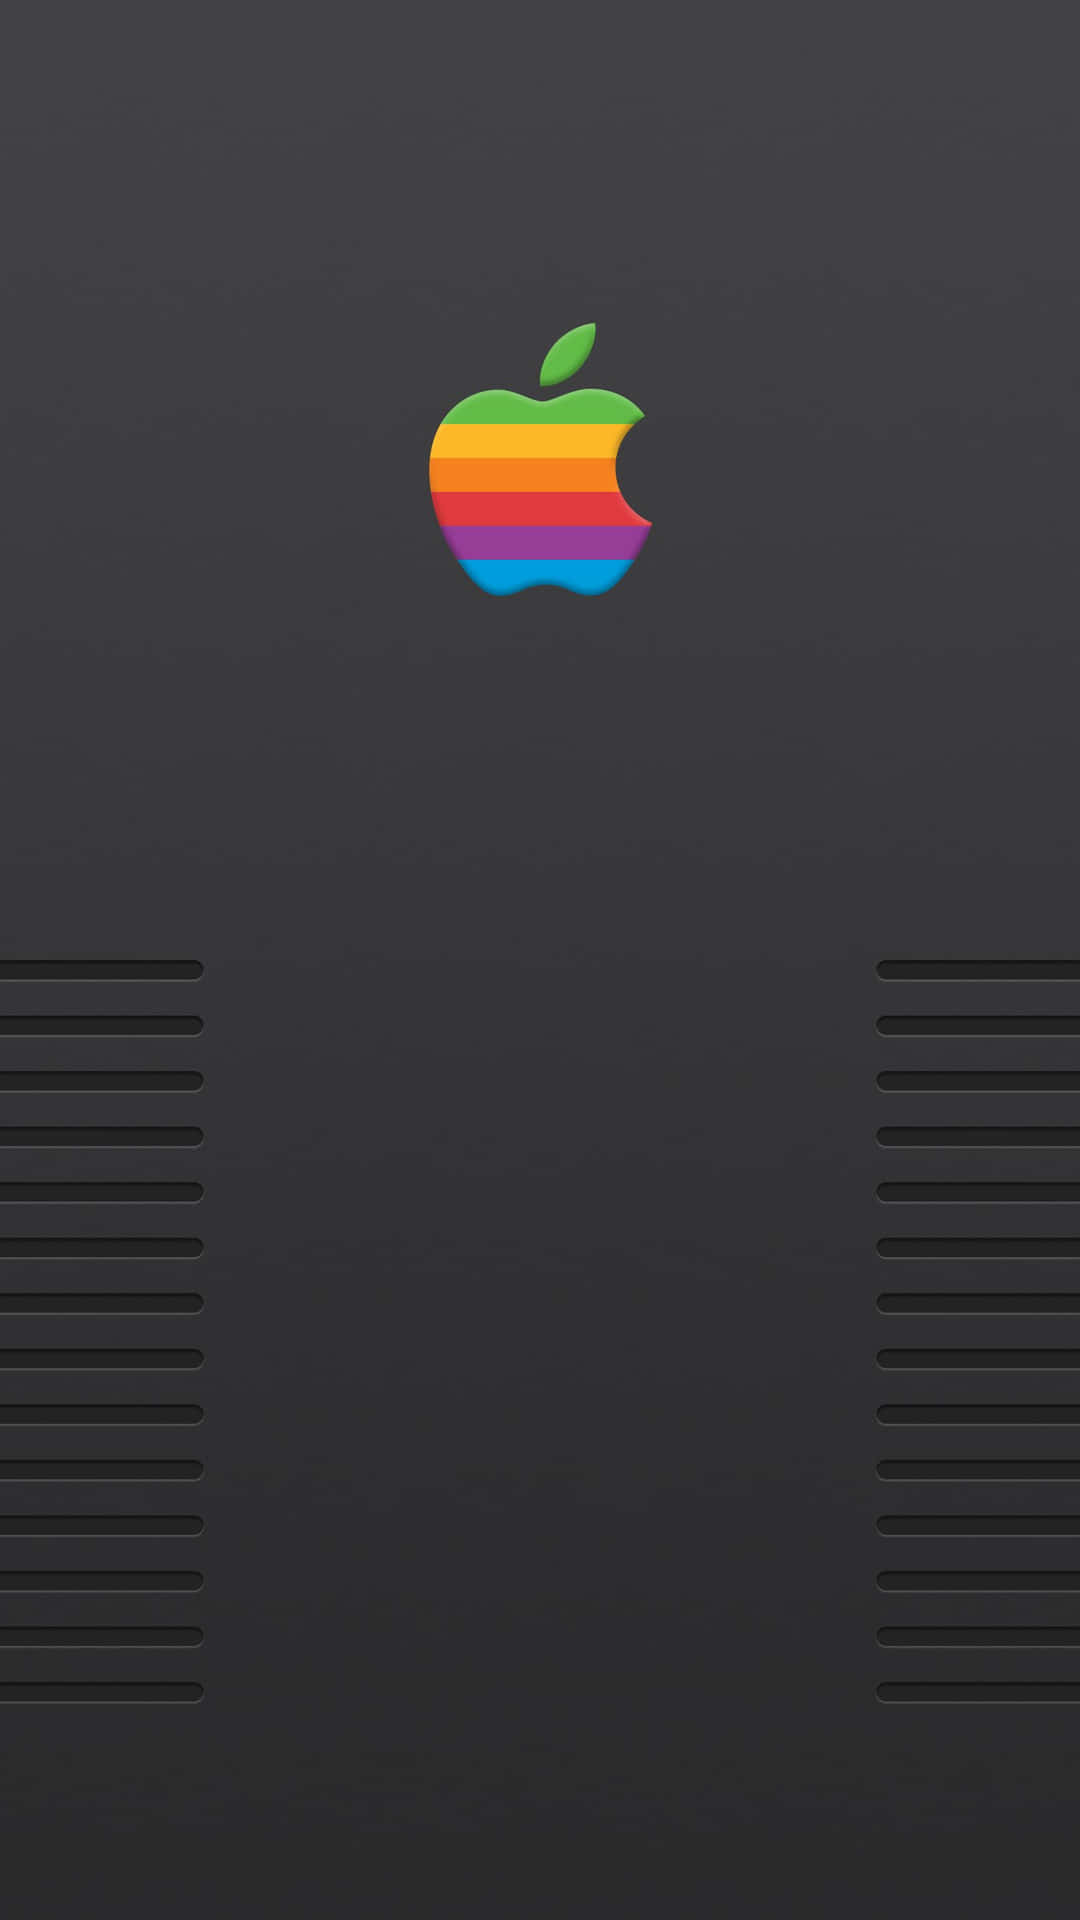 Retro Apple-logo 1497 X 2662 Wallpaper